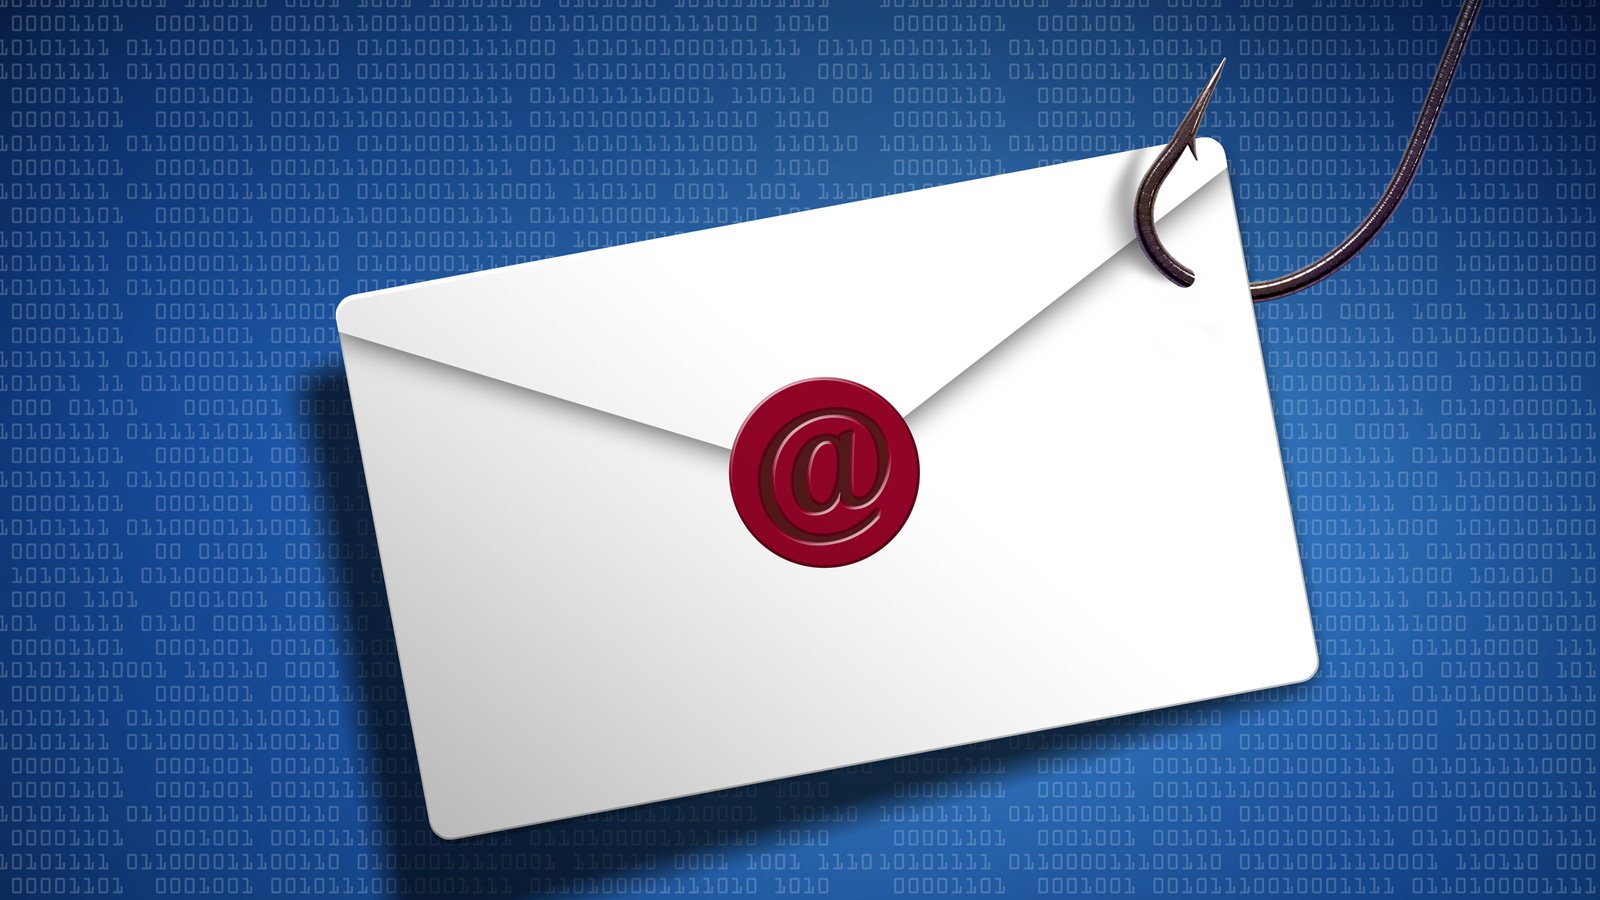 Microsoft 365 phishing attacks impersonate U.S. govt agencies